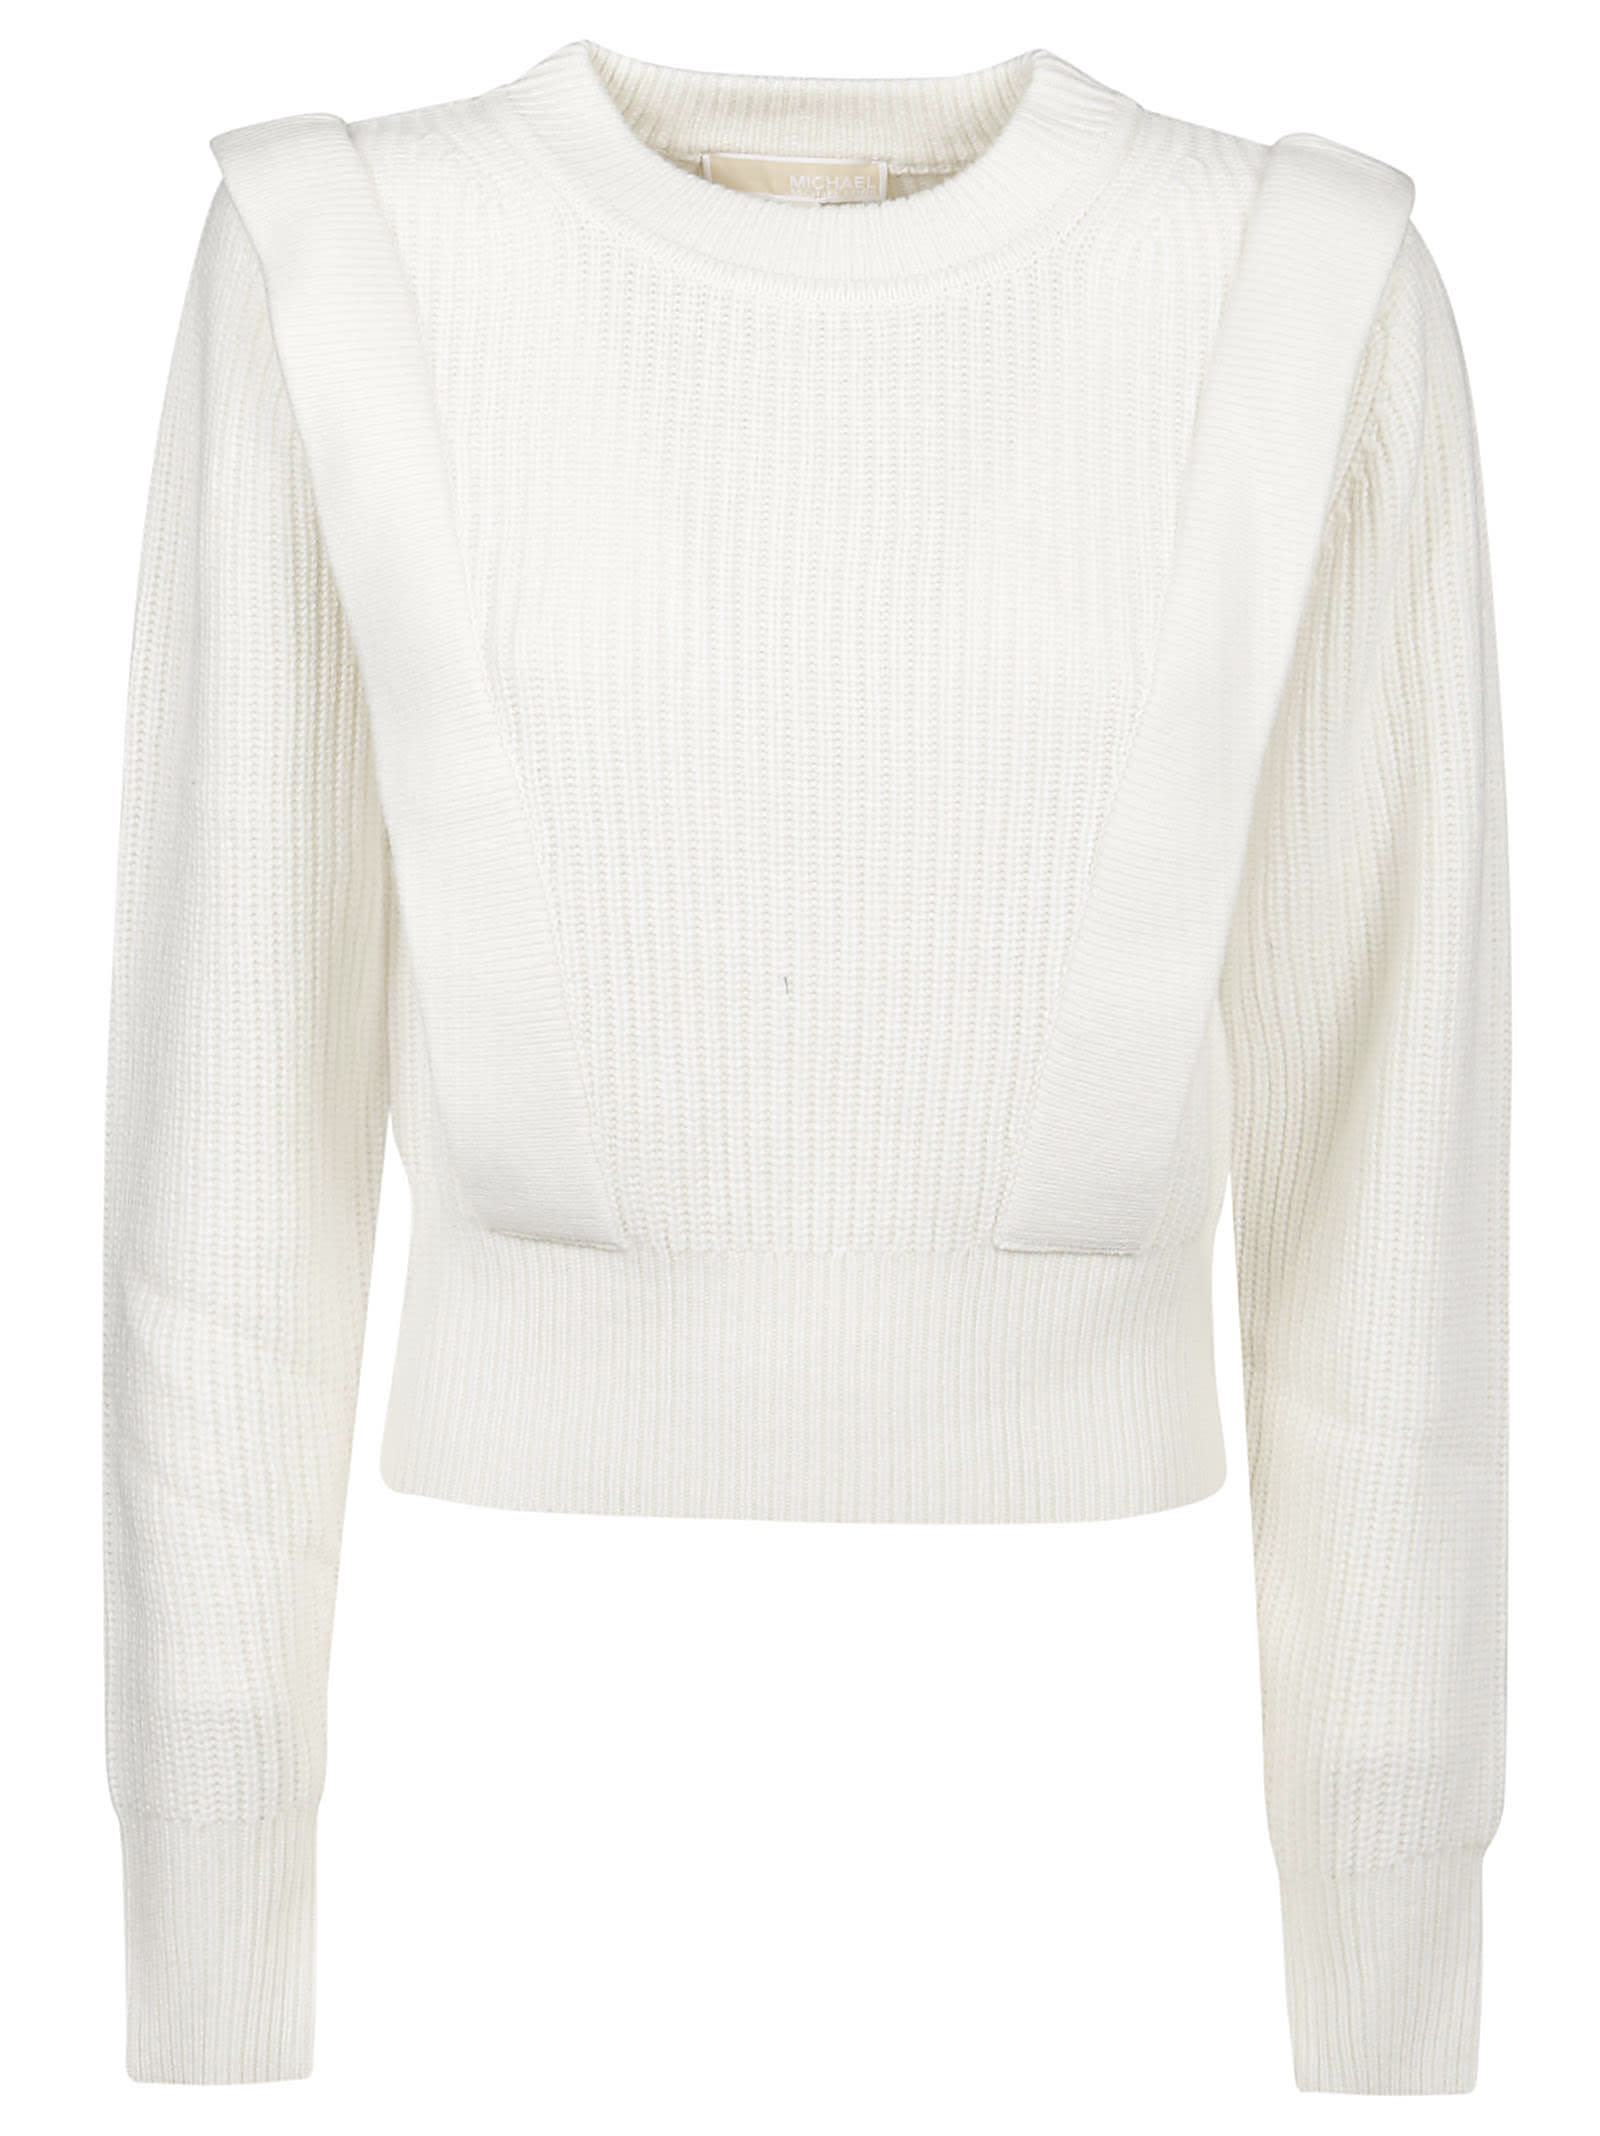 Michael Kors Crop Shaker Sweater